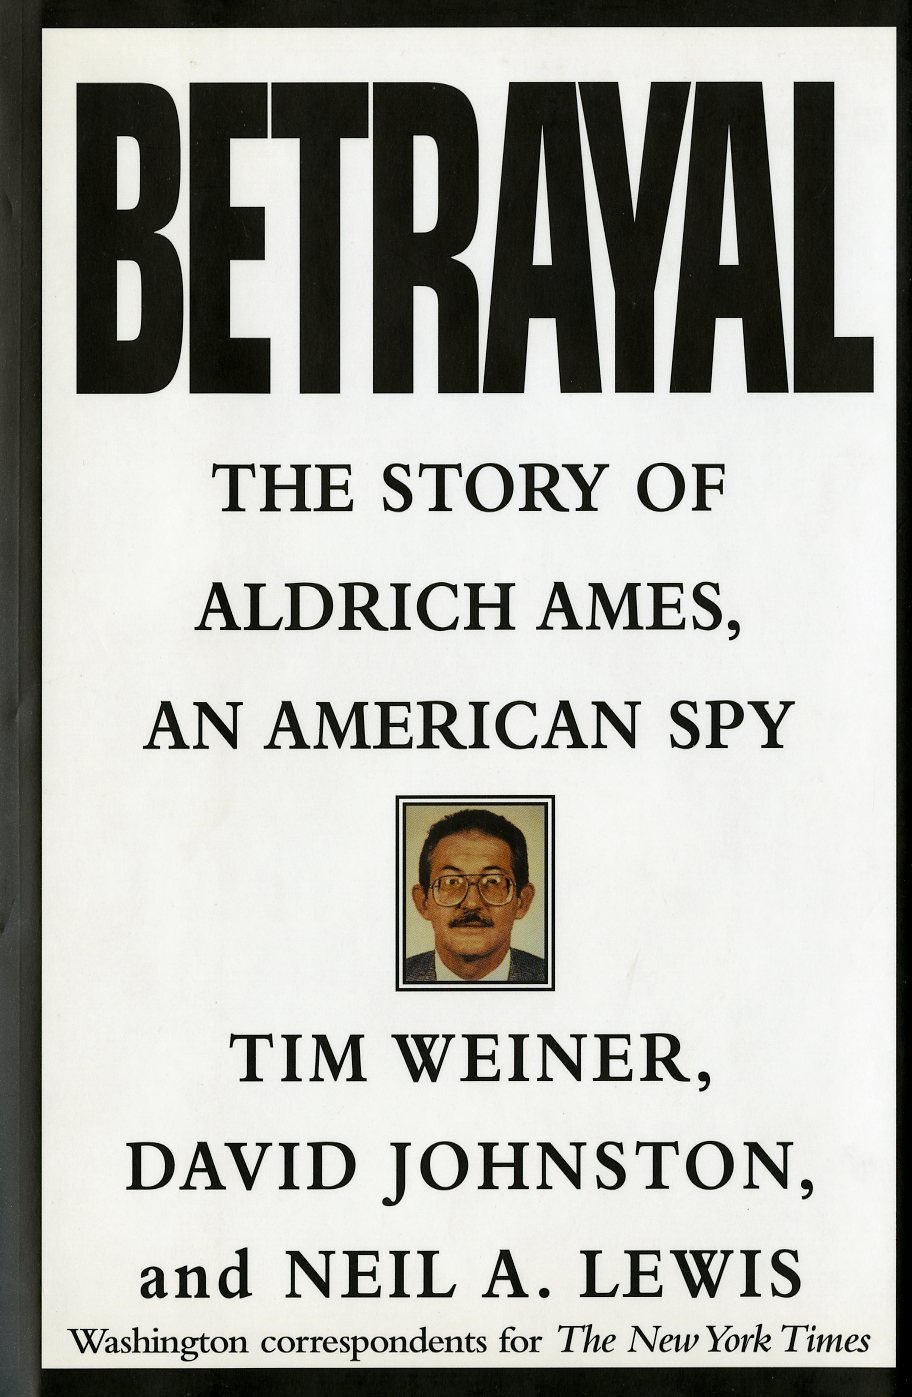 Betrayal by Wiener, Johnston & Lewis